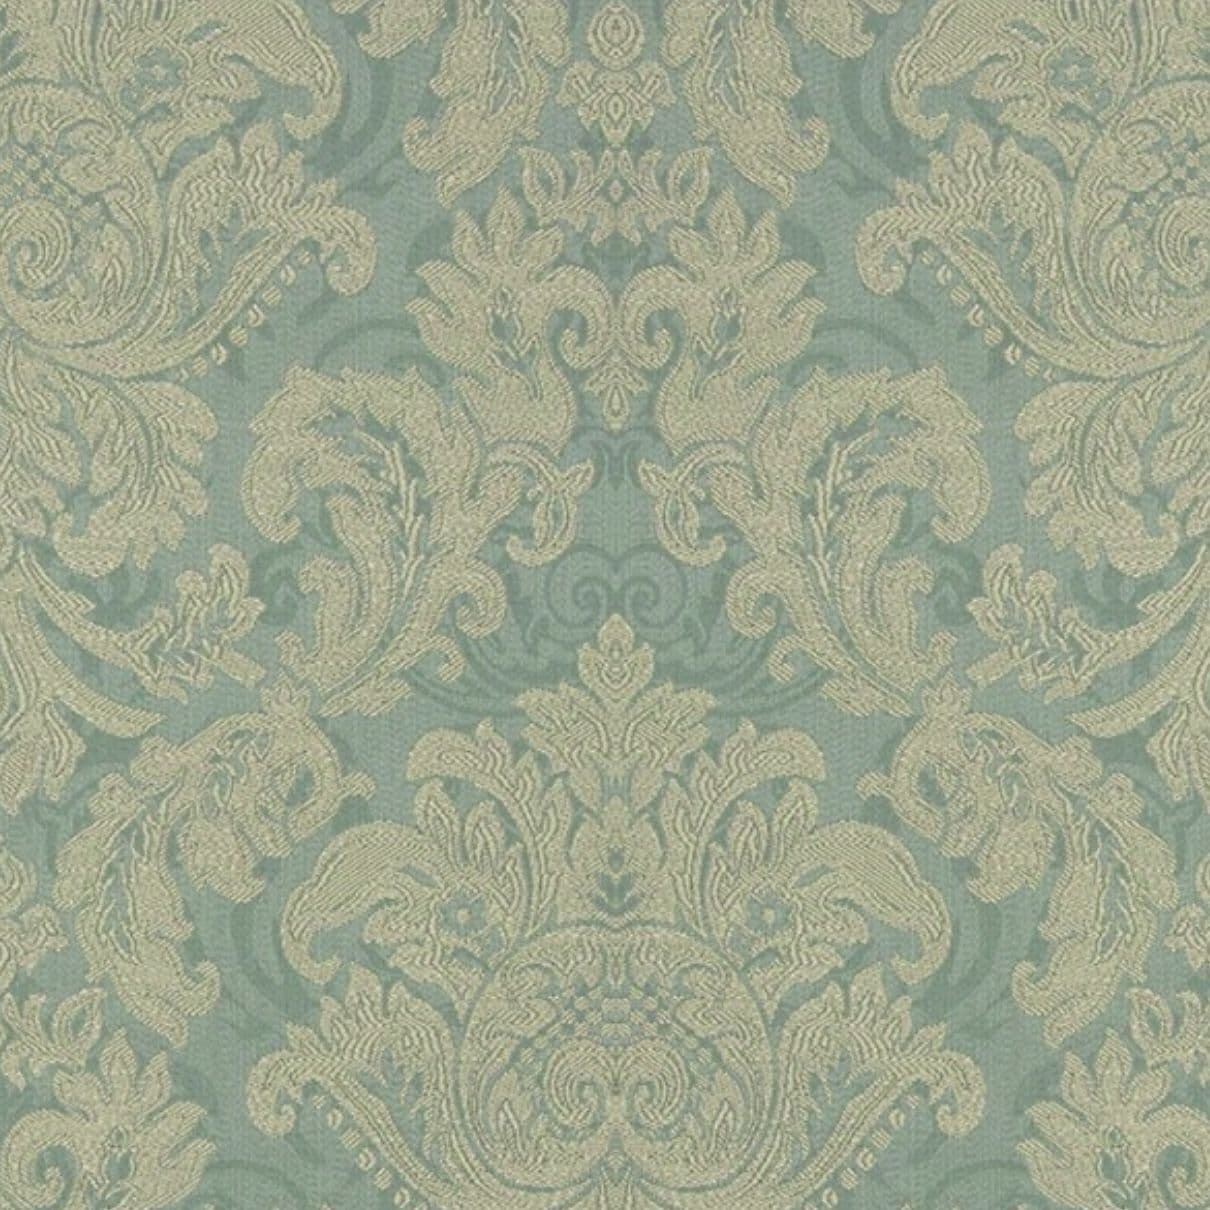 Jim Dickens Berrington Damask Fabric in Periwinkle. 1.4 mts